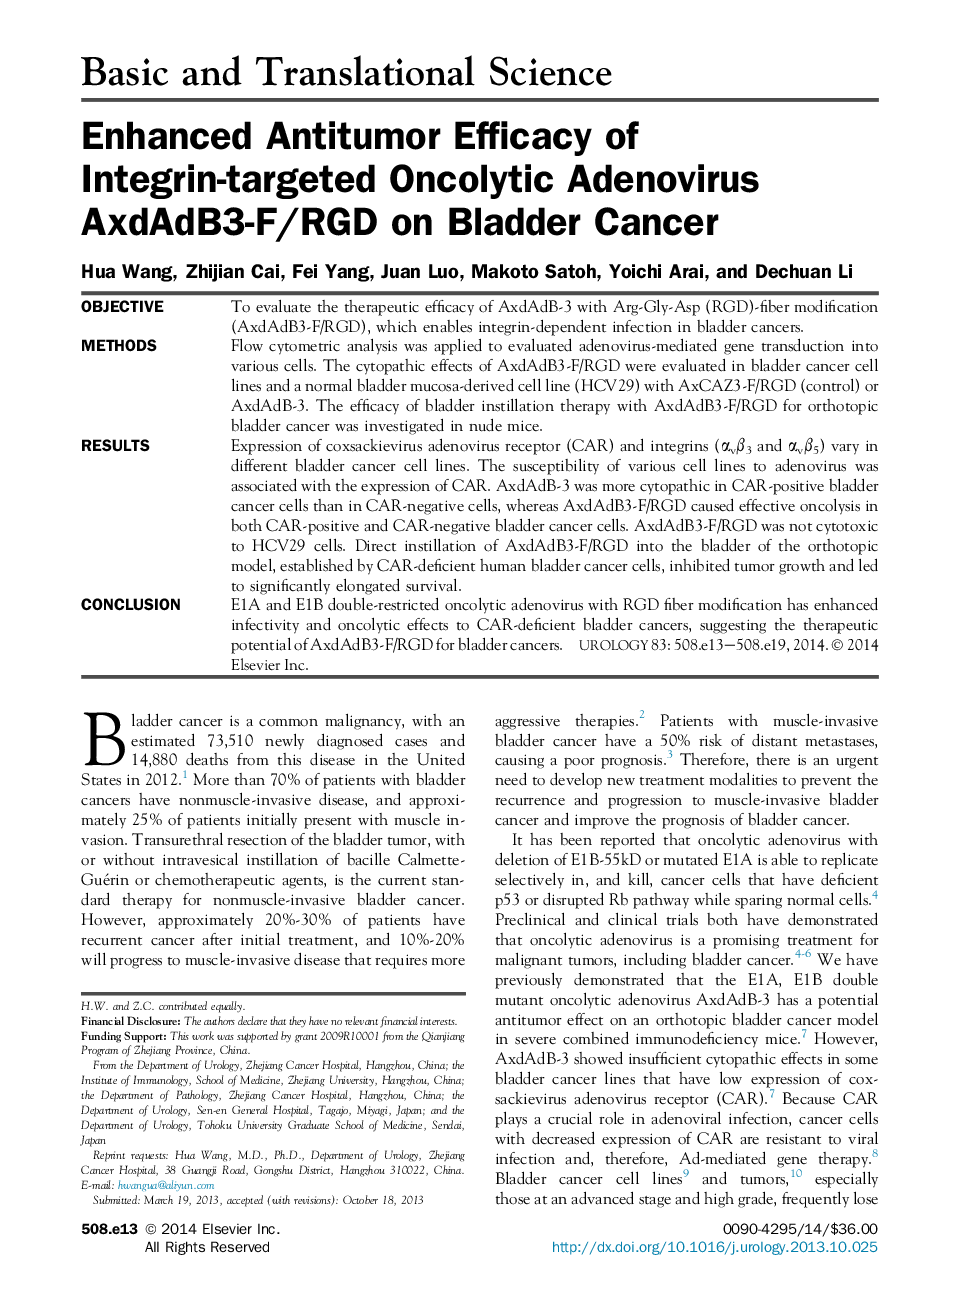 Enhanced Antitumor Efficacy of Integrin-targeted Oncolytic Adenovirus AxdAdB3-F/RGD on Bladder Cancer